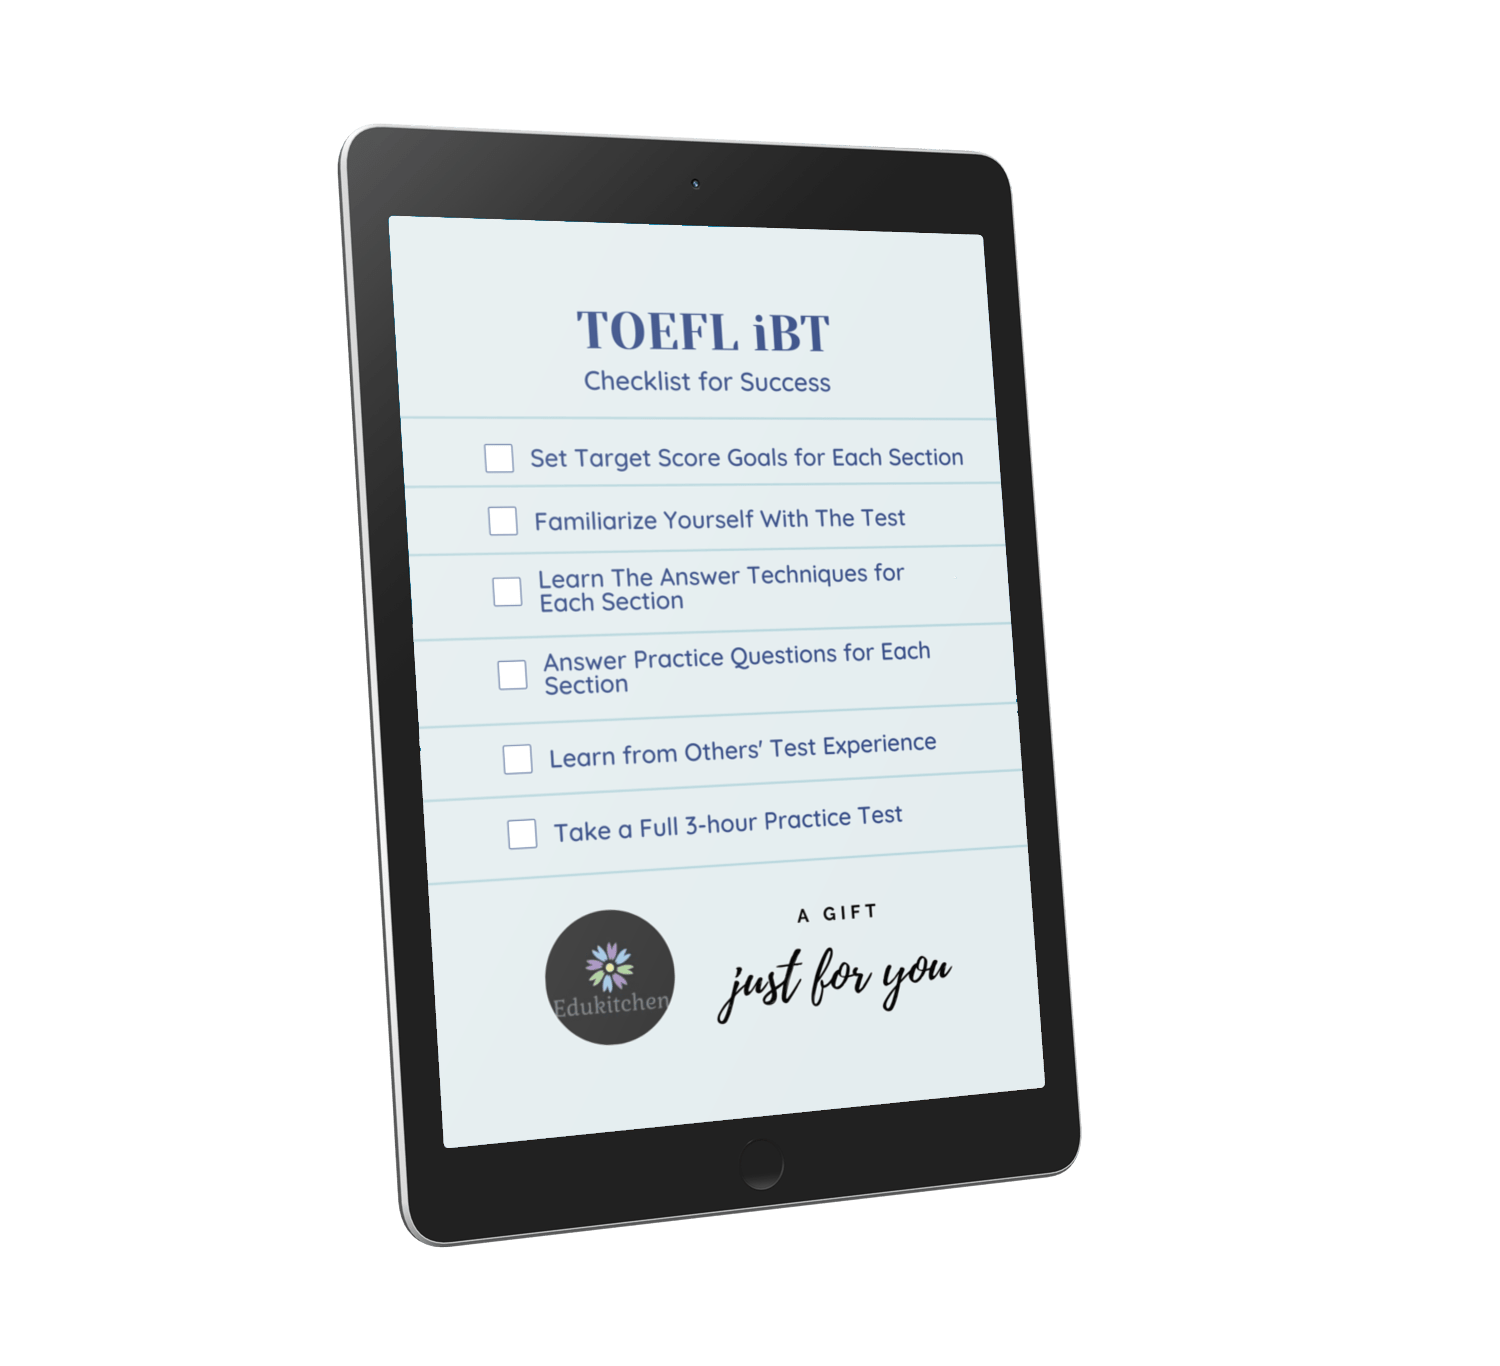 TOEFL iBT checklist guide